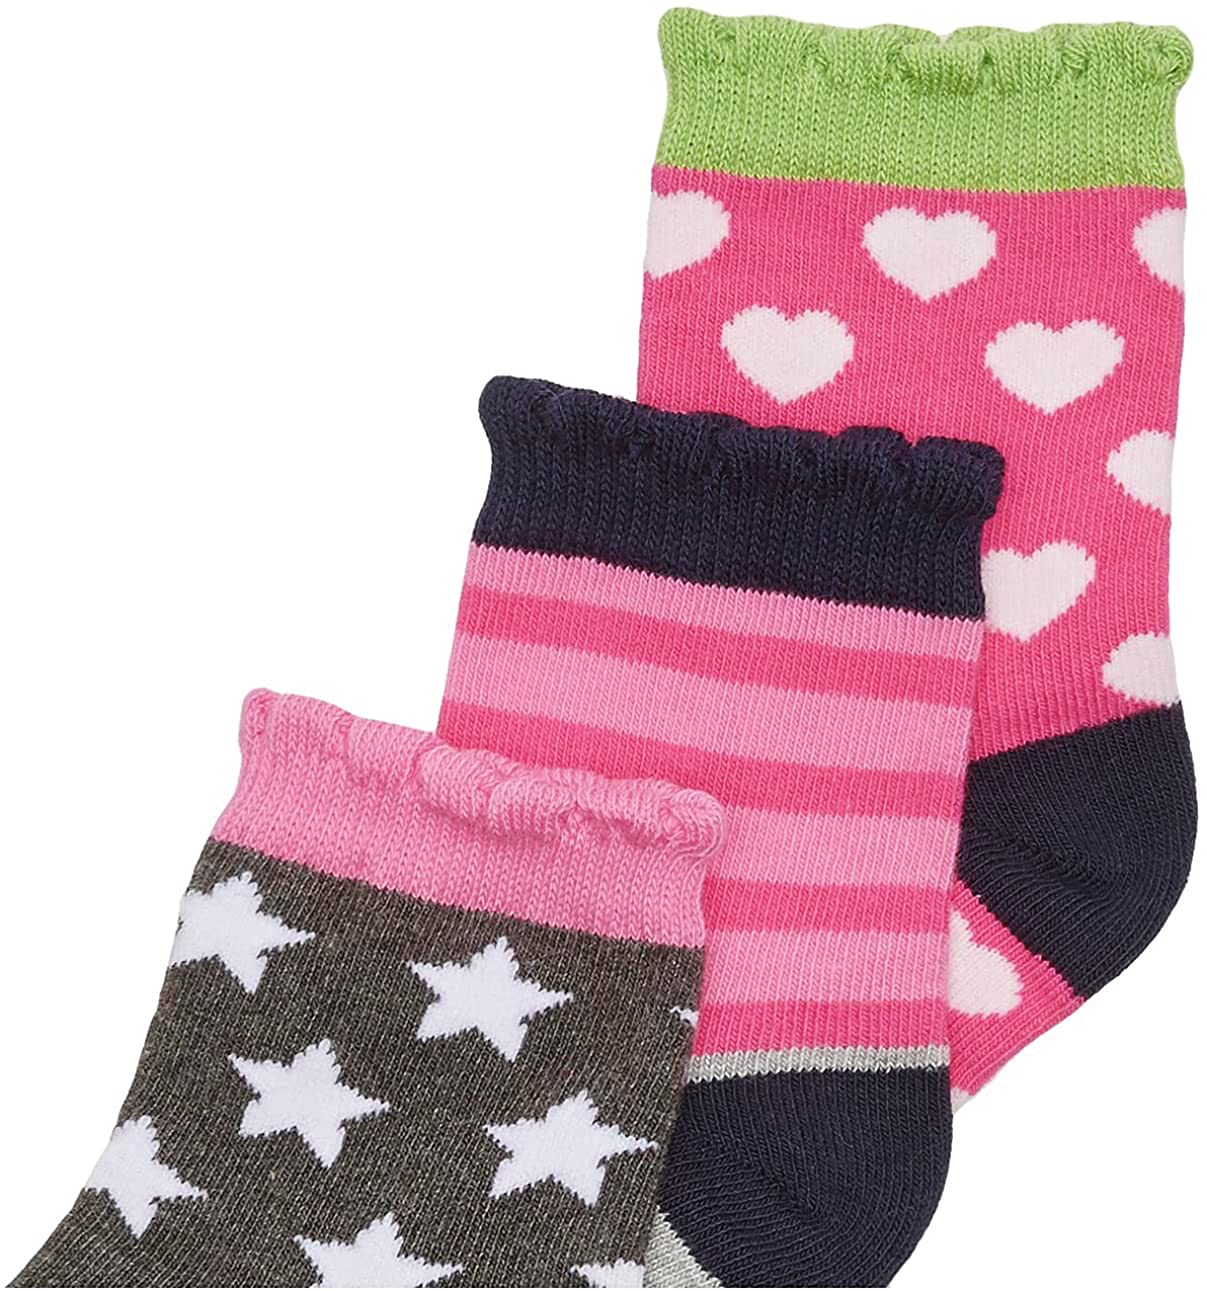 Jefferies Socks Little Girls' Dots/Hearts/Stripes Fashion Crew Socks 6 Pairs Pack